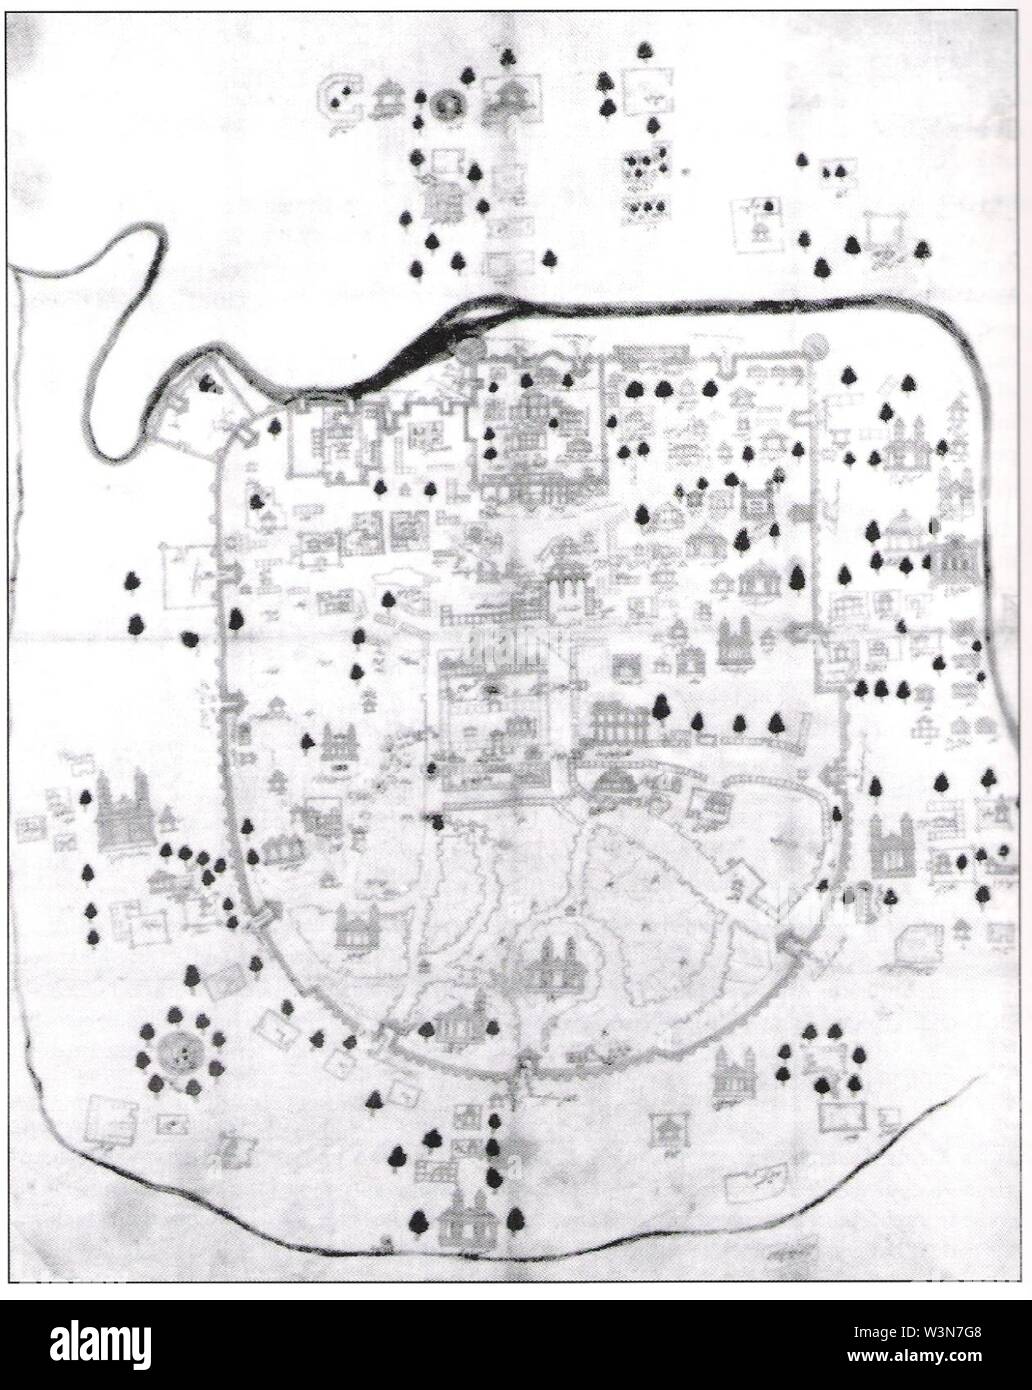 Cloth map of ahmedabad. Stock Photo